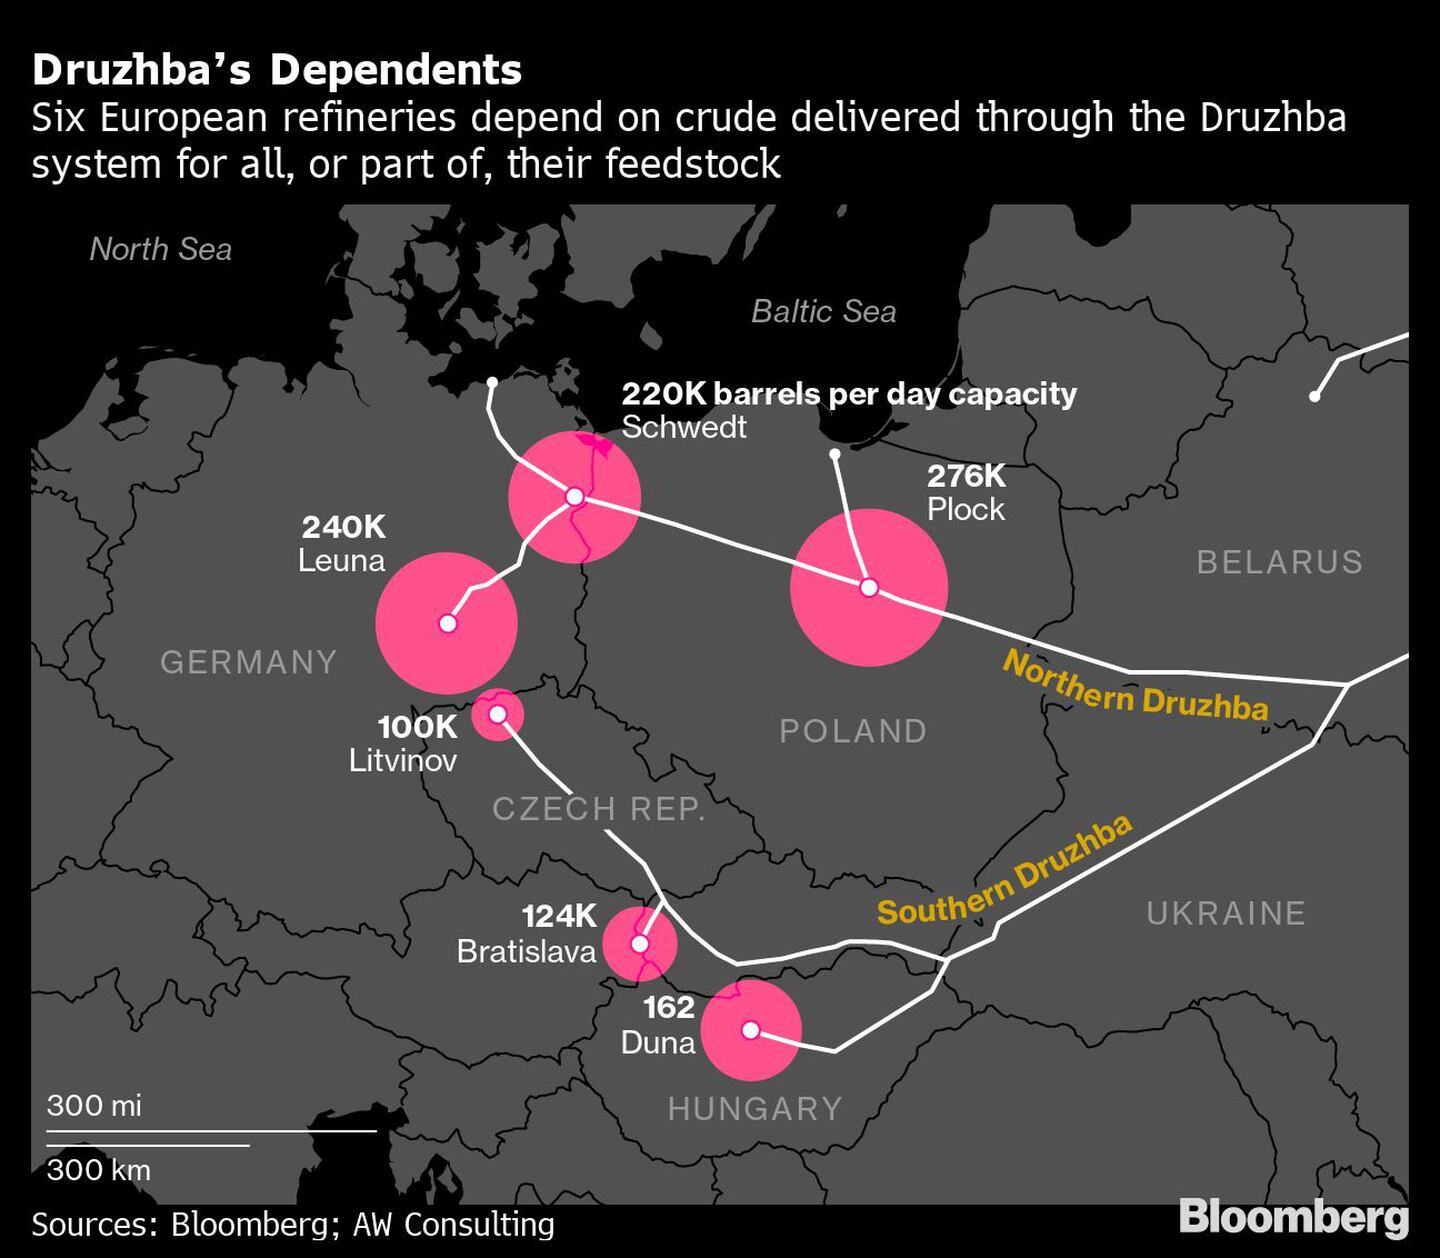 Seis refinerías europeas dependen del crudo del sistema Druzhba para todo o parte de su produccióndfd